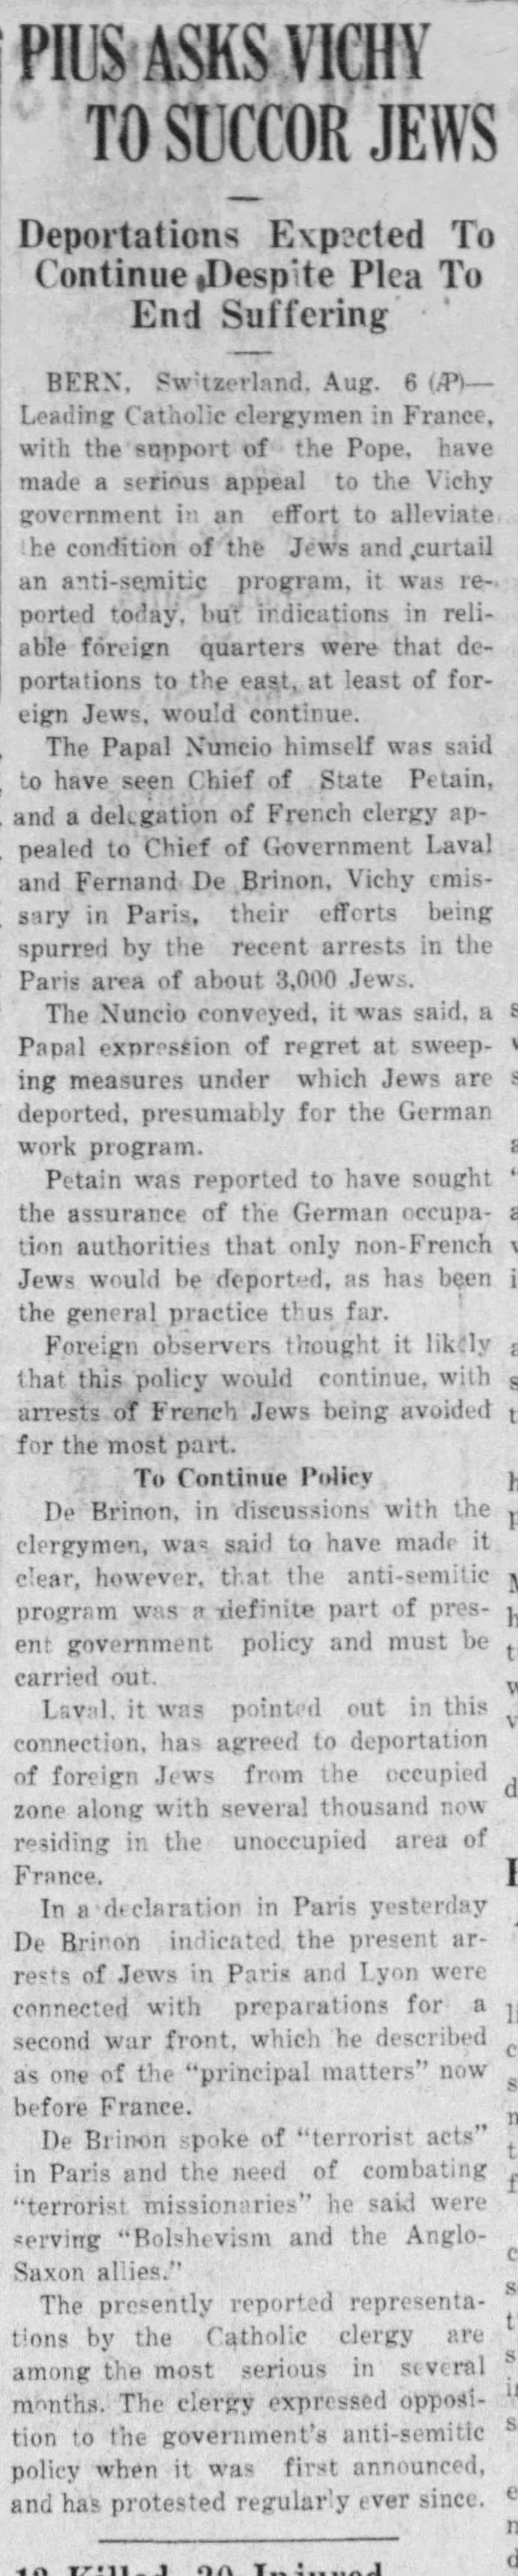 Pius Asks Vichy To Succor Jews